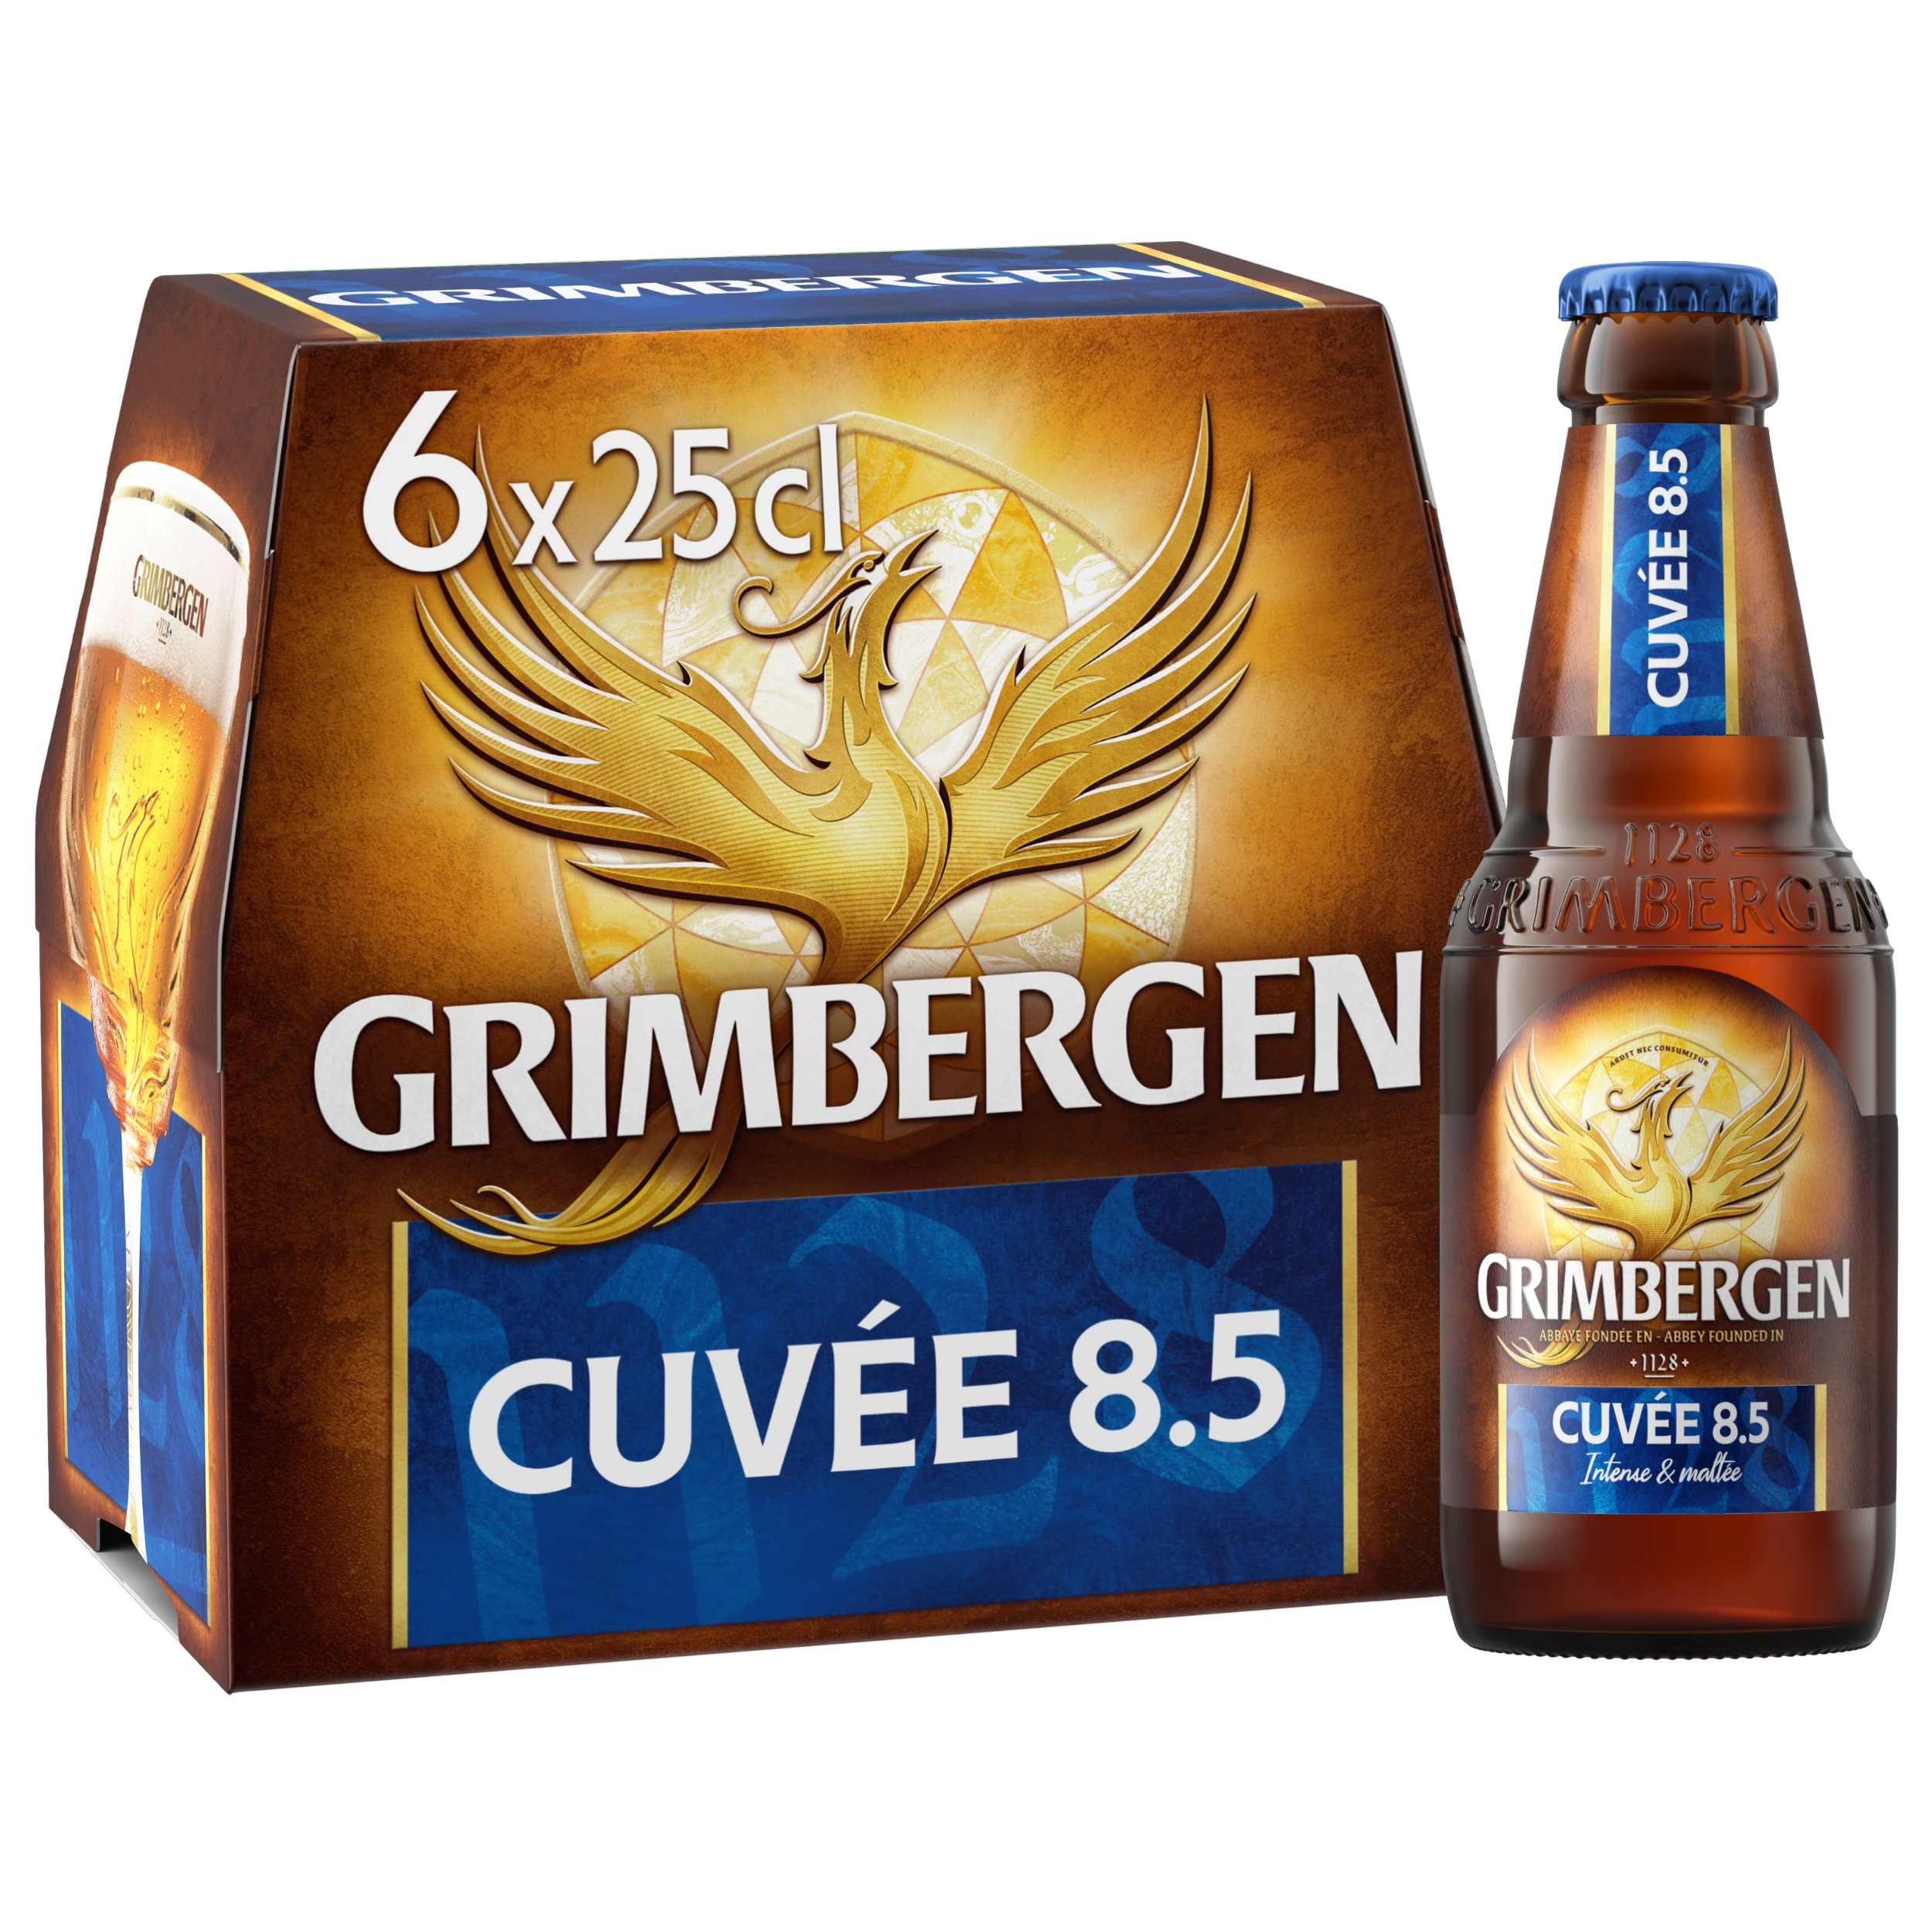 Grimbergen Cuvee 8d5 6x25cl